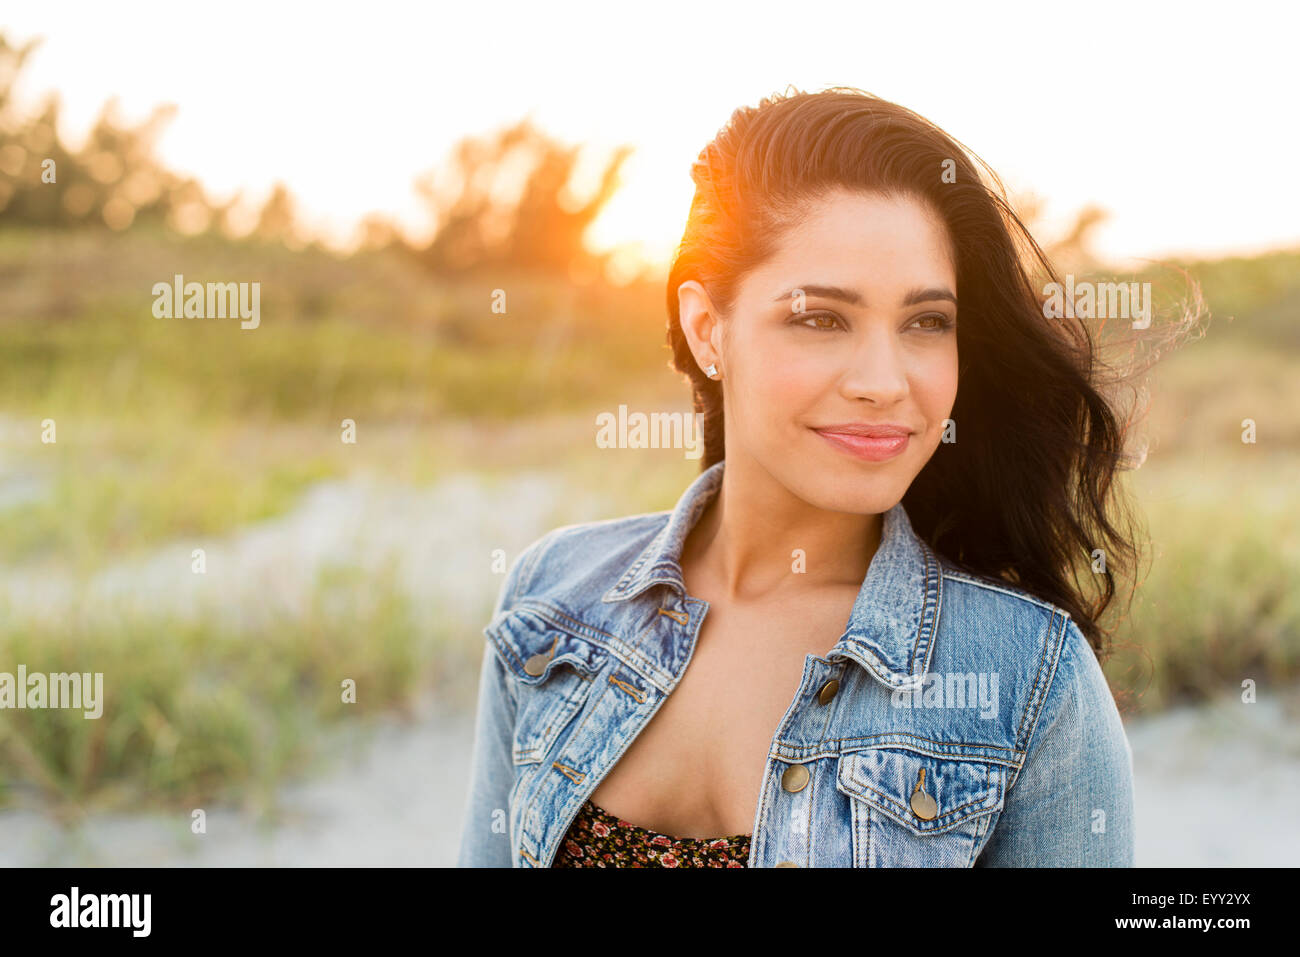 Hispanic woman standing on beach Stock Photo